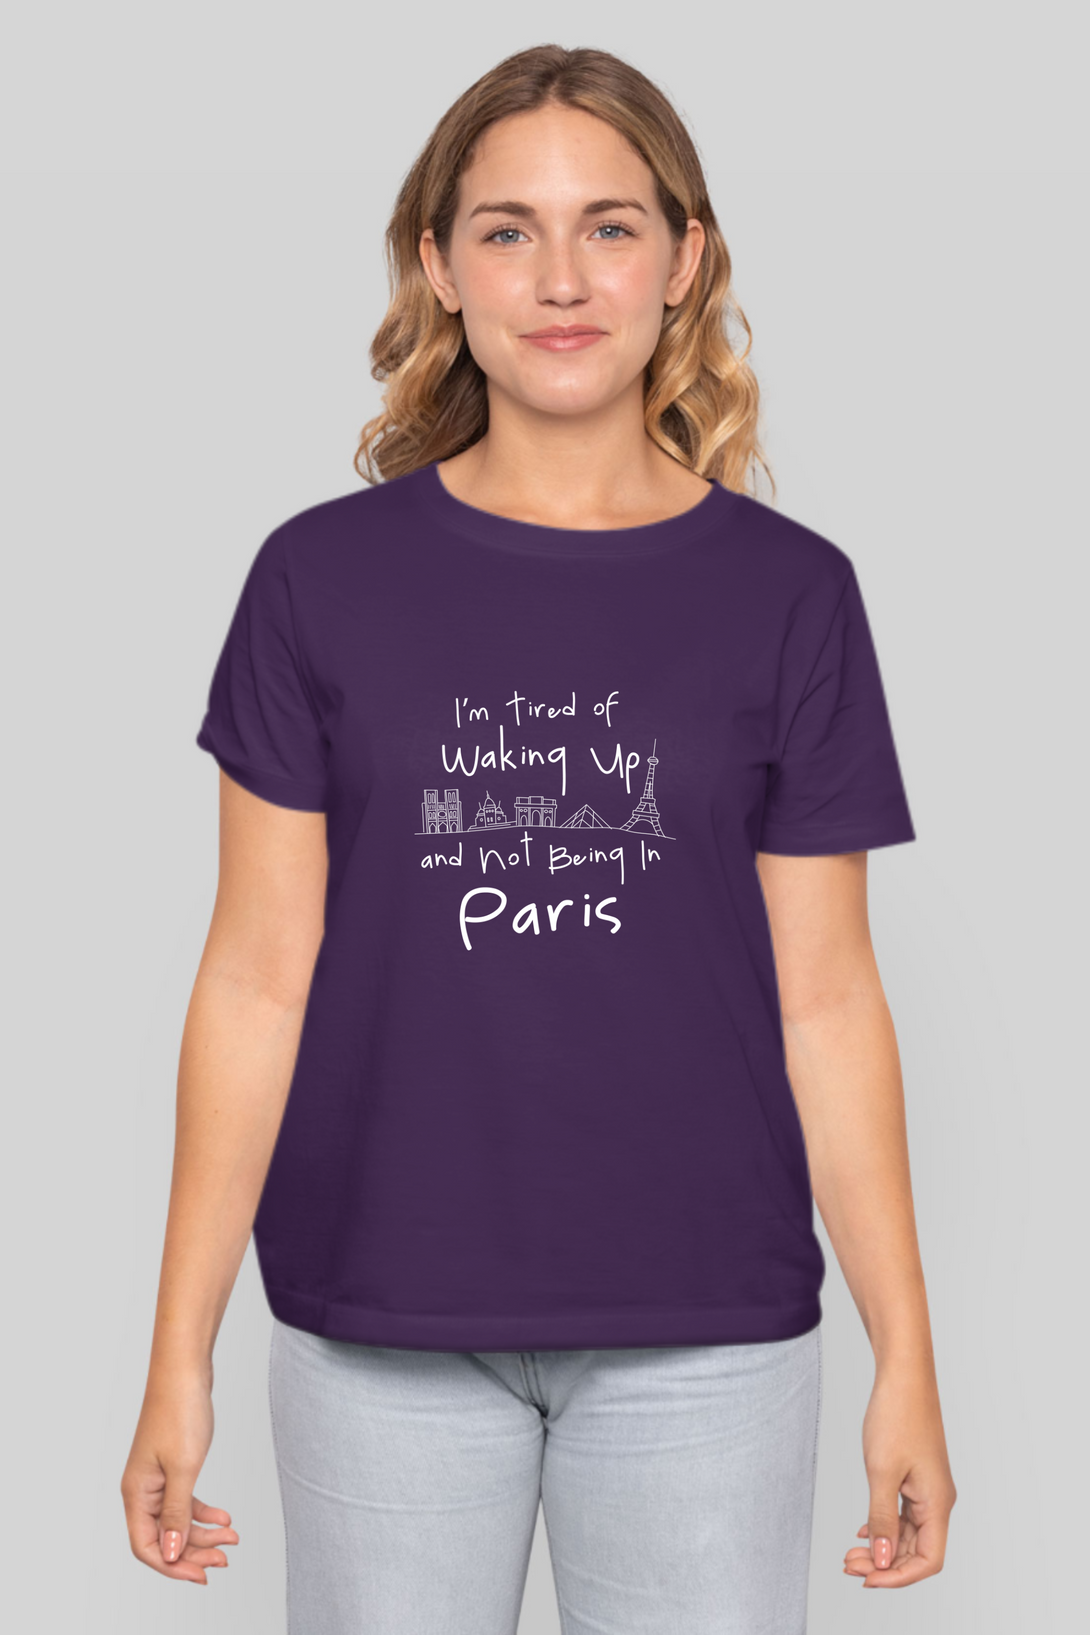 Paris Dreaming Printed T-Shirt For Women - WowWaves - 6